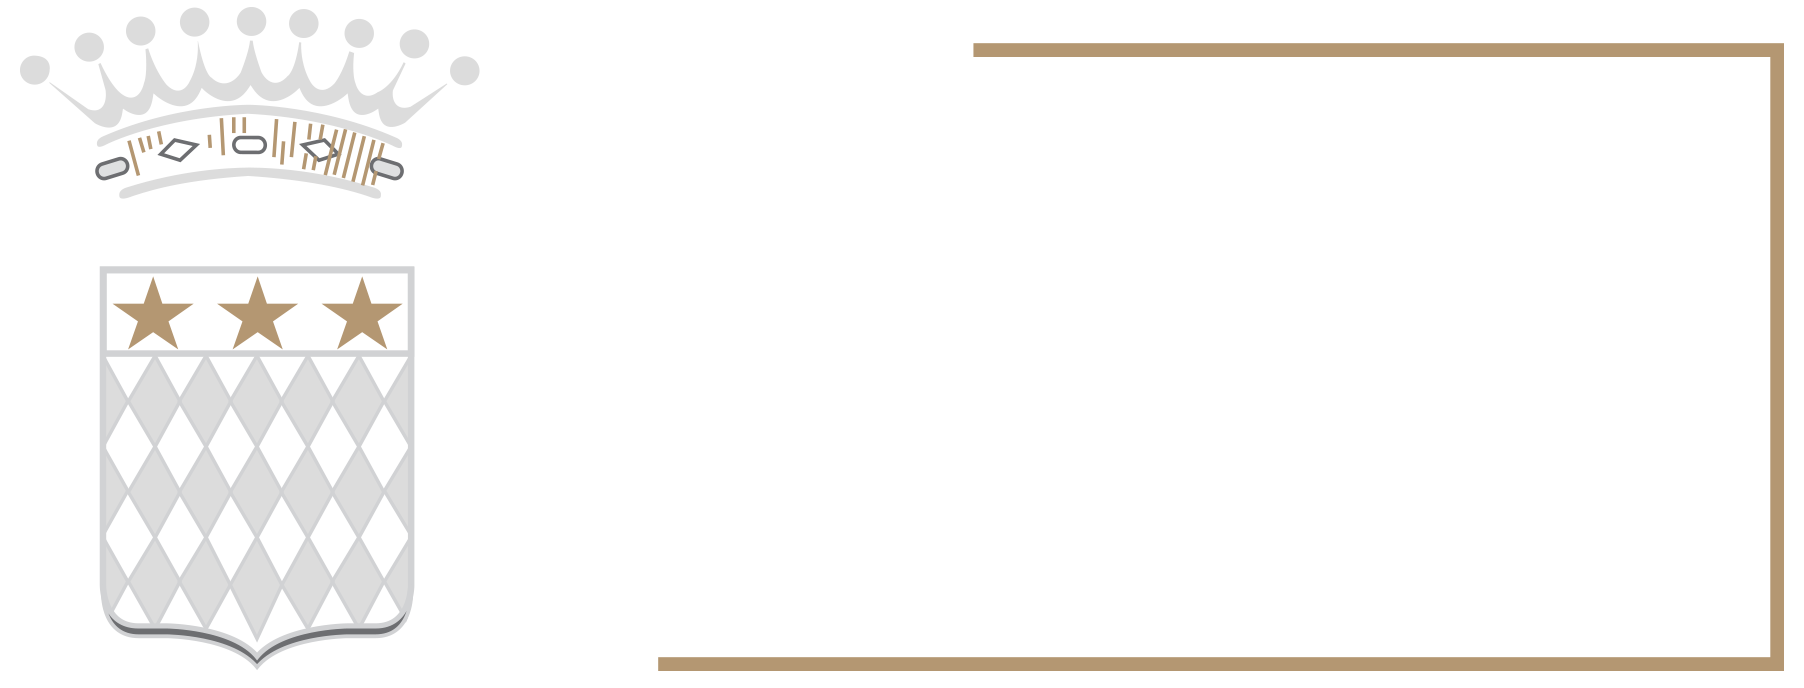 Domaine Renucci – Vin de Corse AOP Corse-Calvi